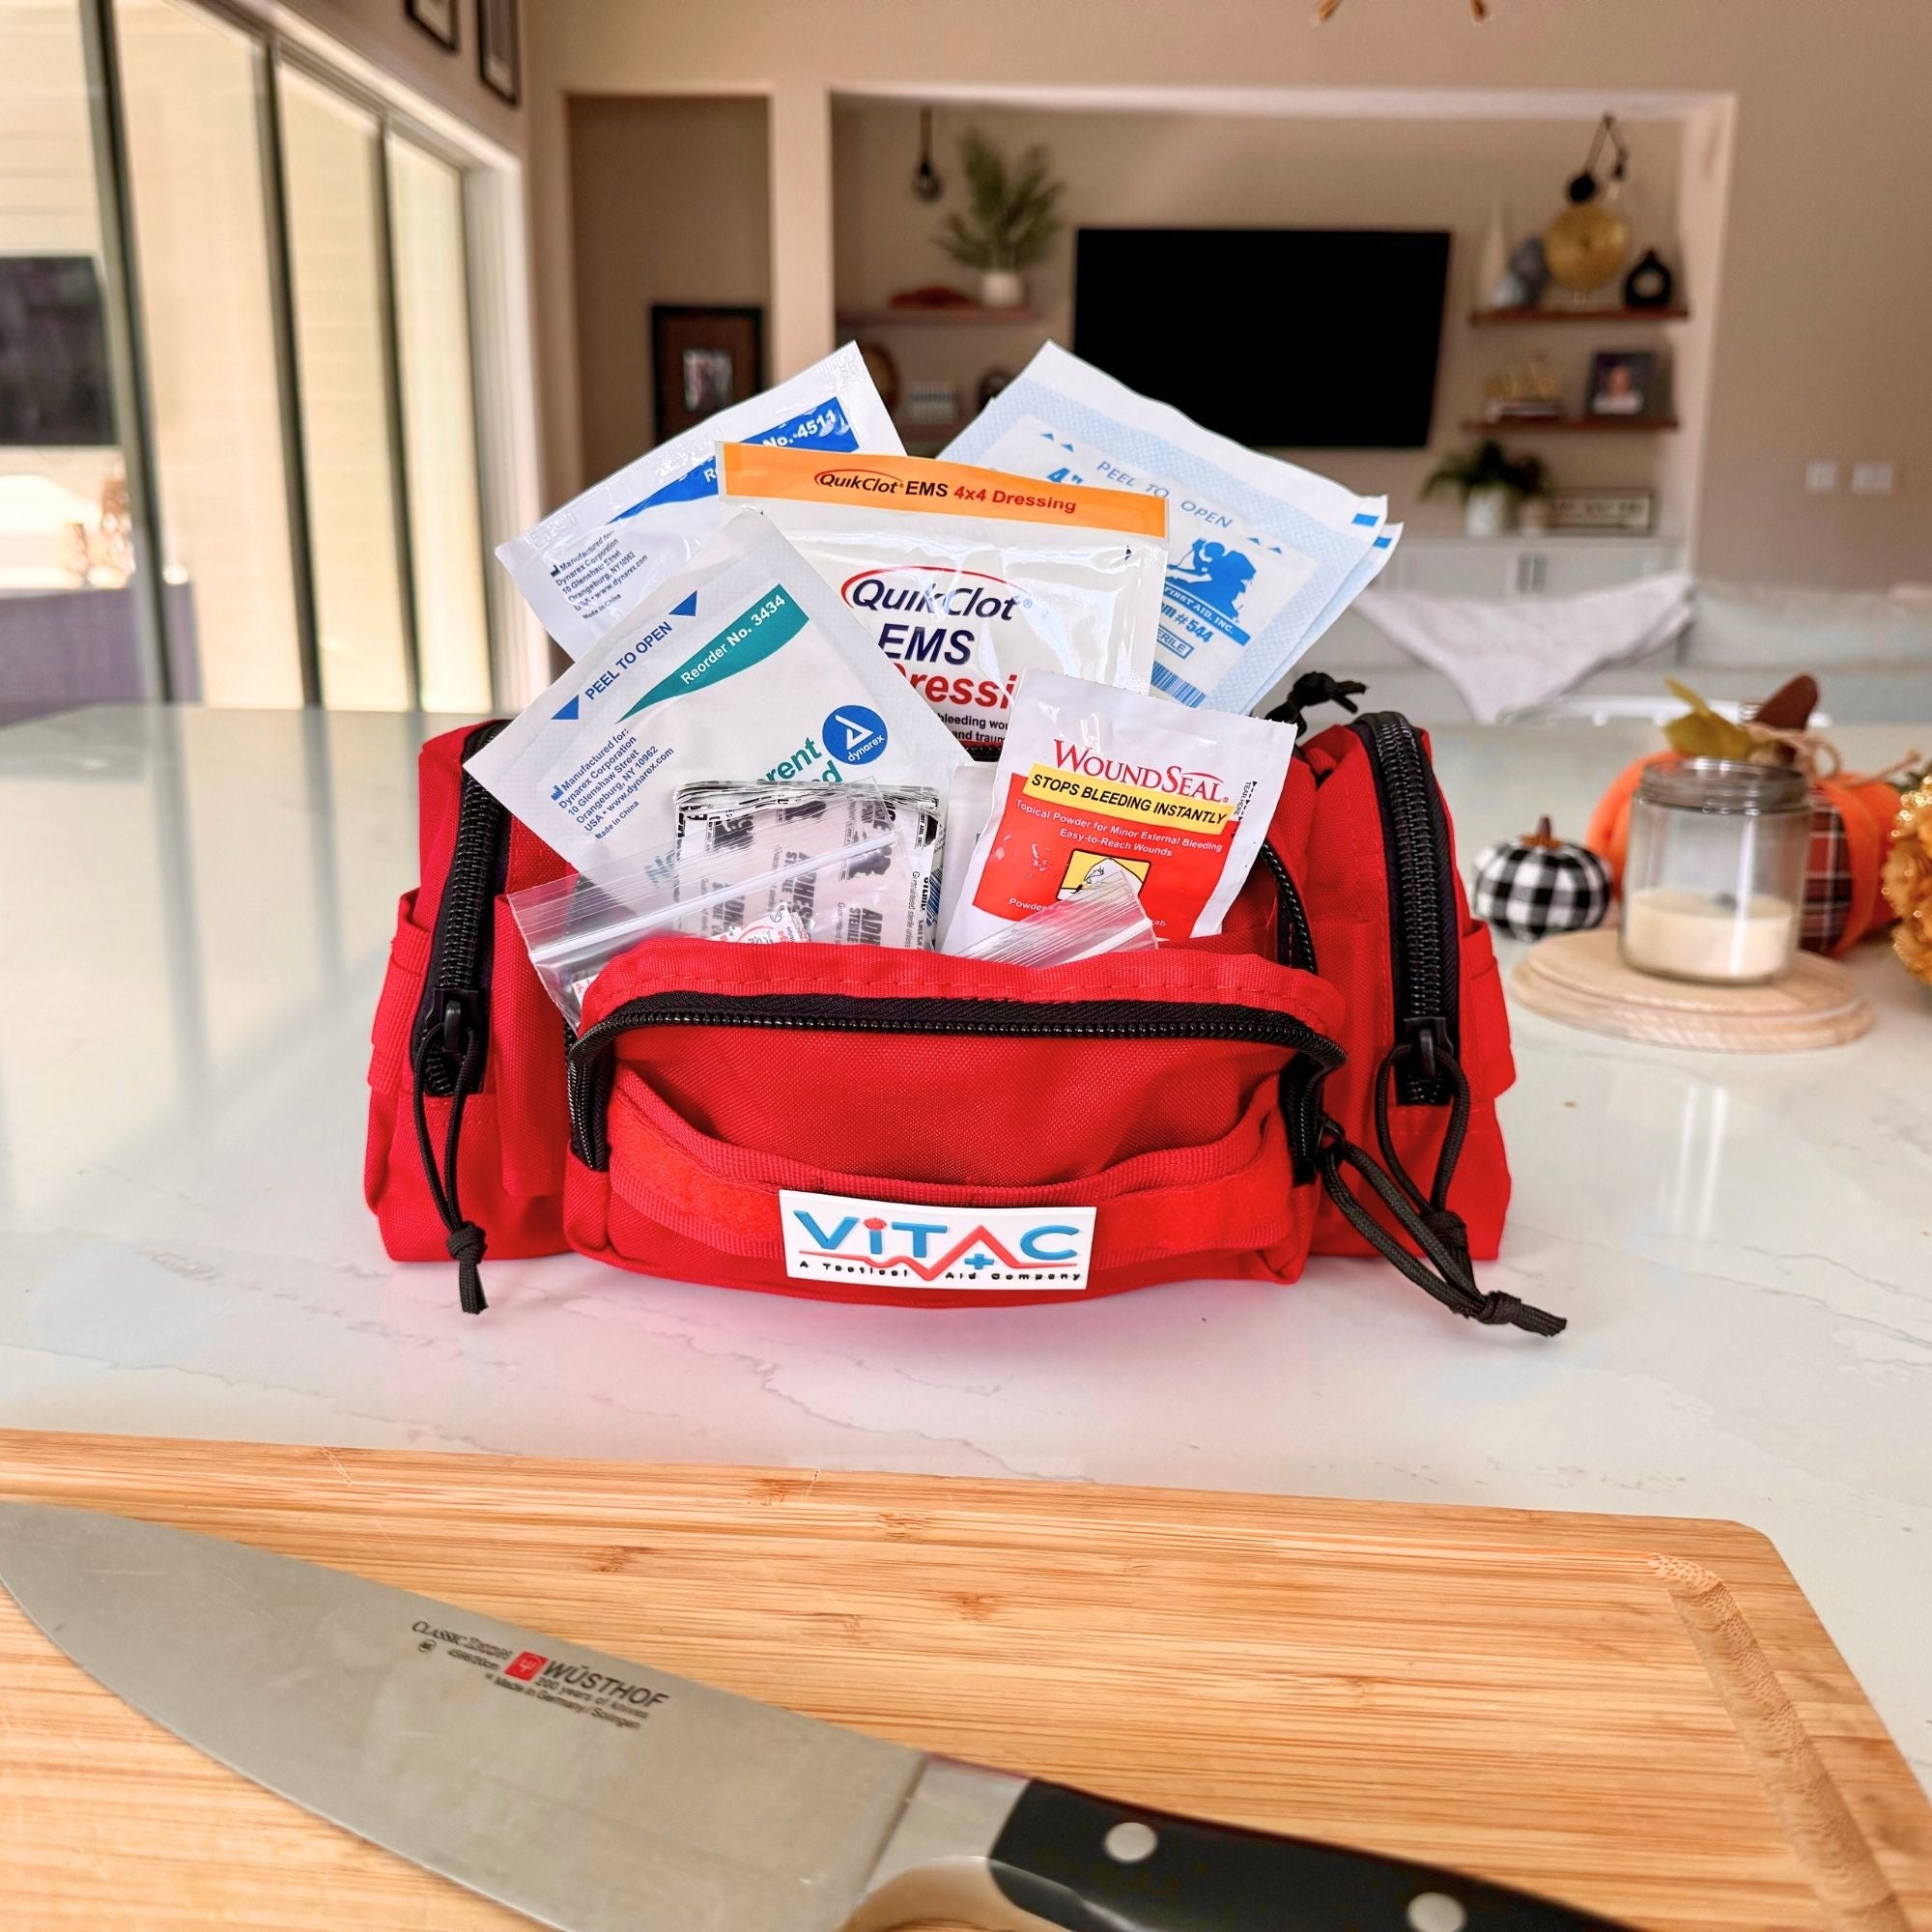 ViTAC Home First Aid Kit